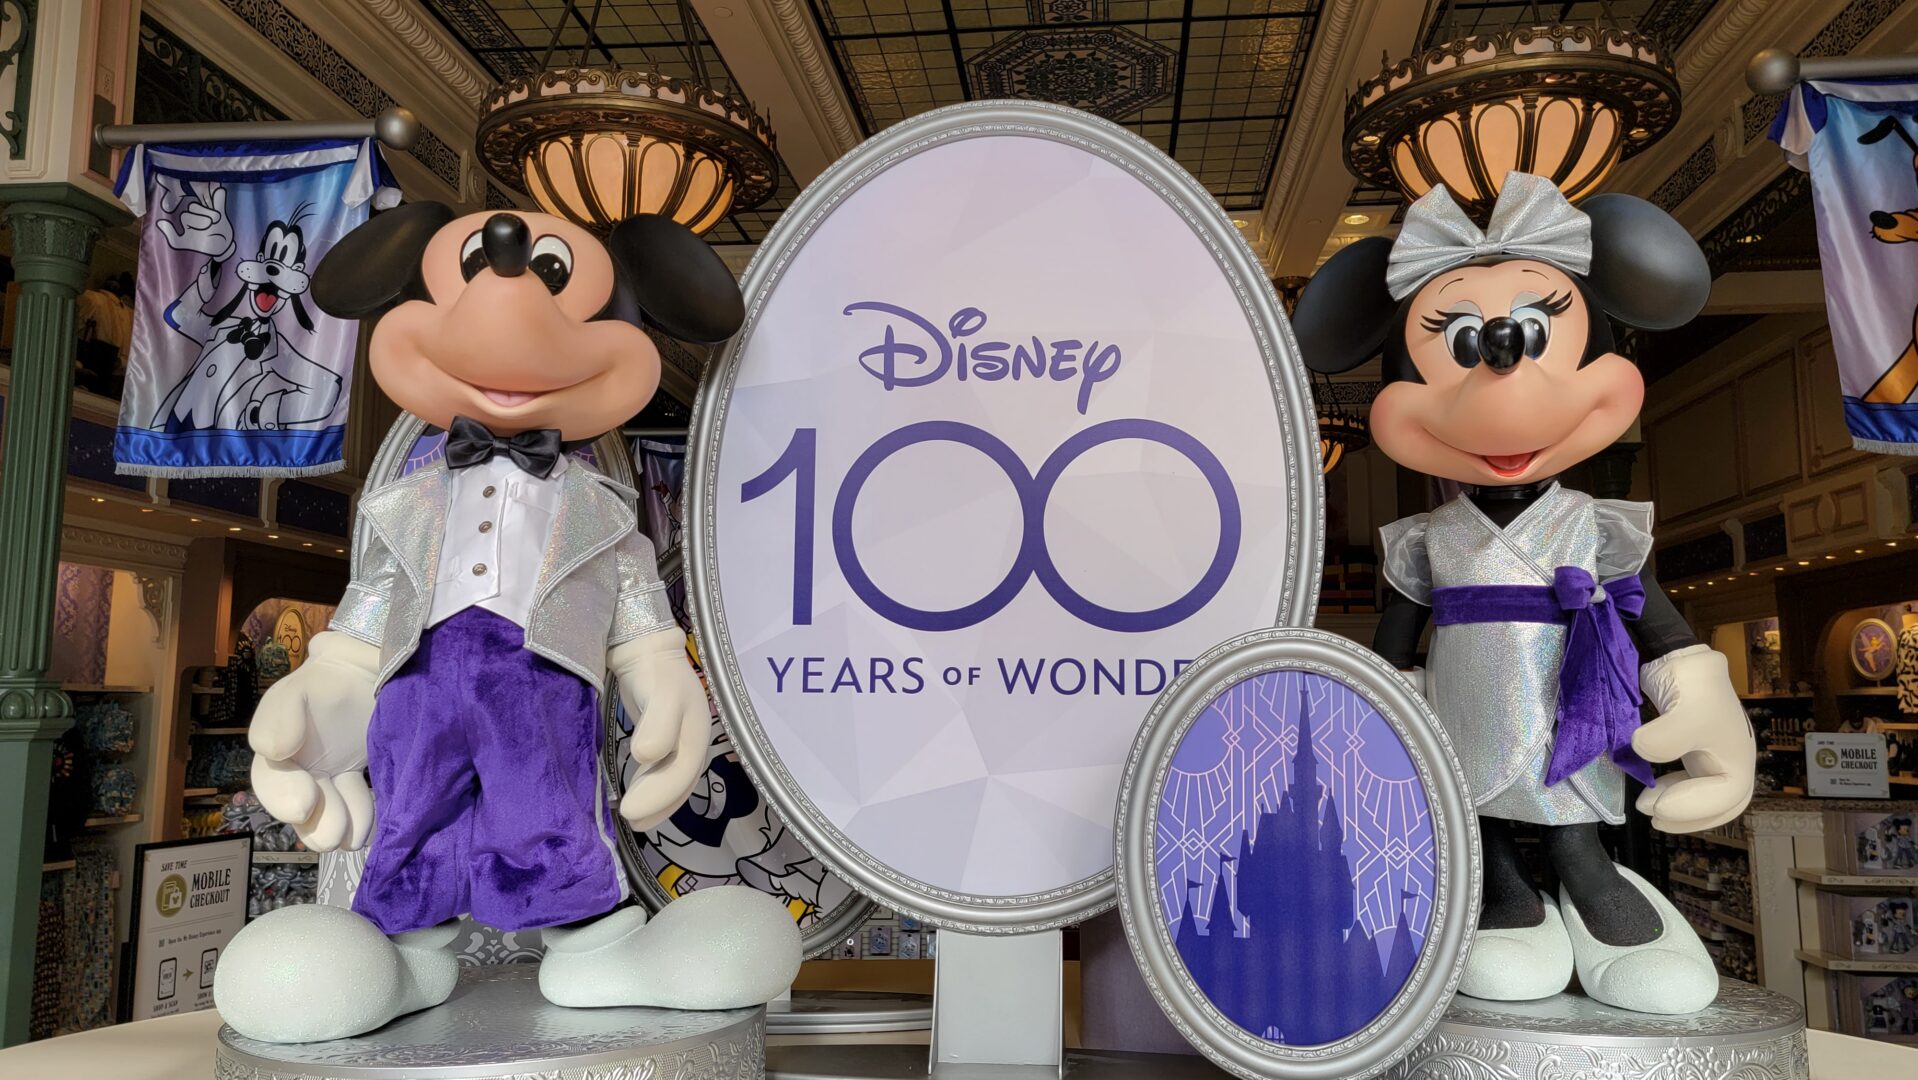 Disney100 Replaces Disney World 50th Merchandise at the Emporium